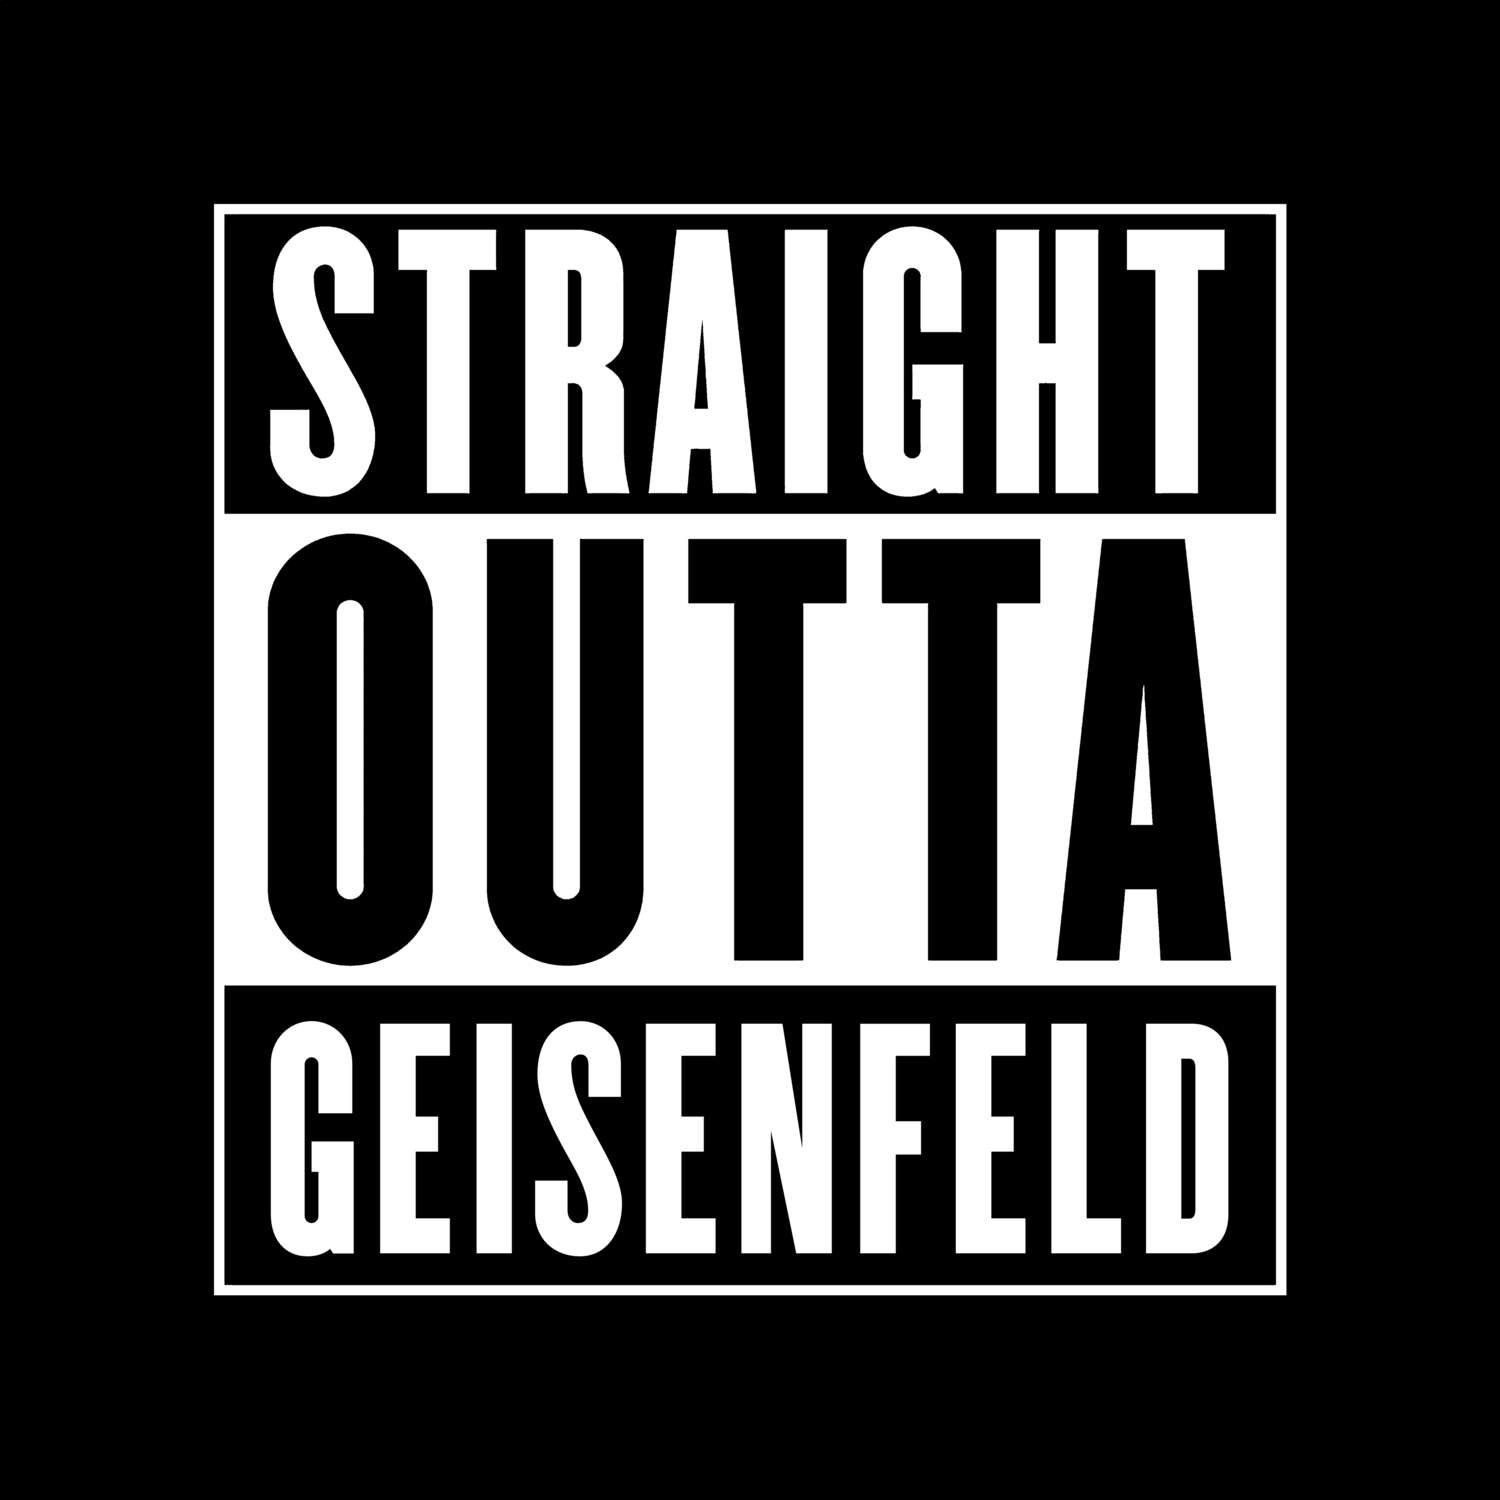 Geisenfeld T-Shirt »Straight Outta«